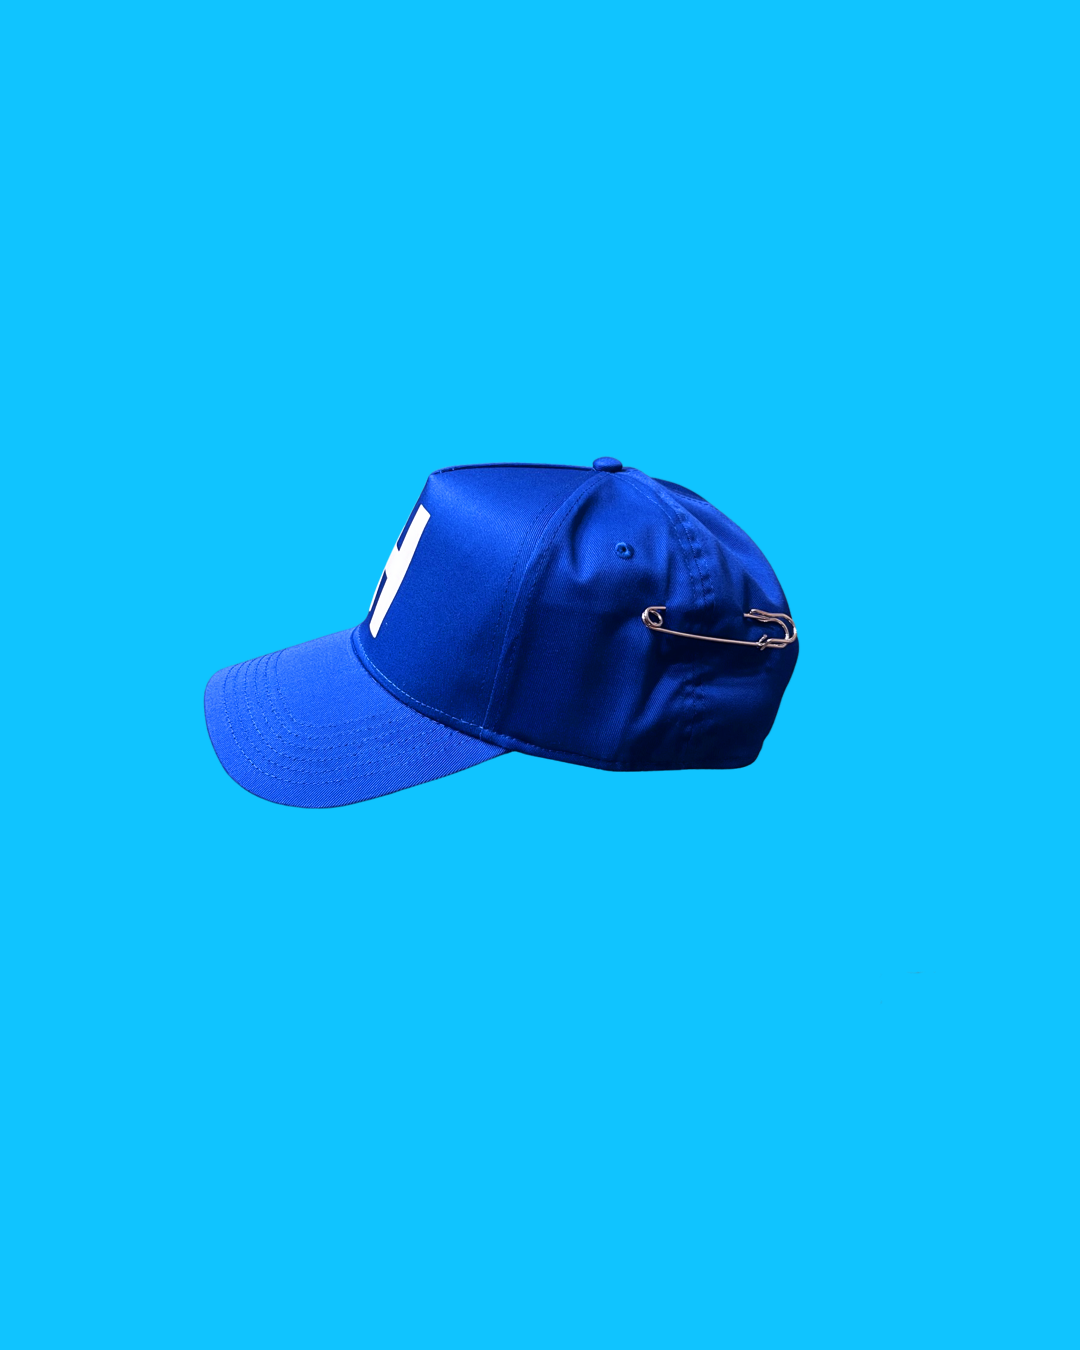 "H' Baseball Snapback Cap - Royal Blue